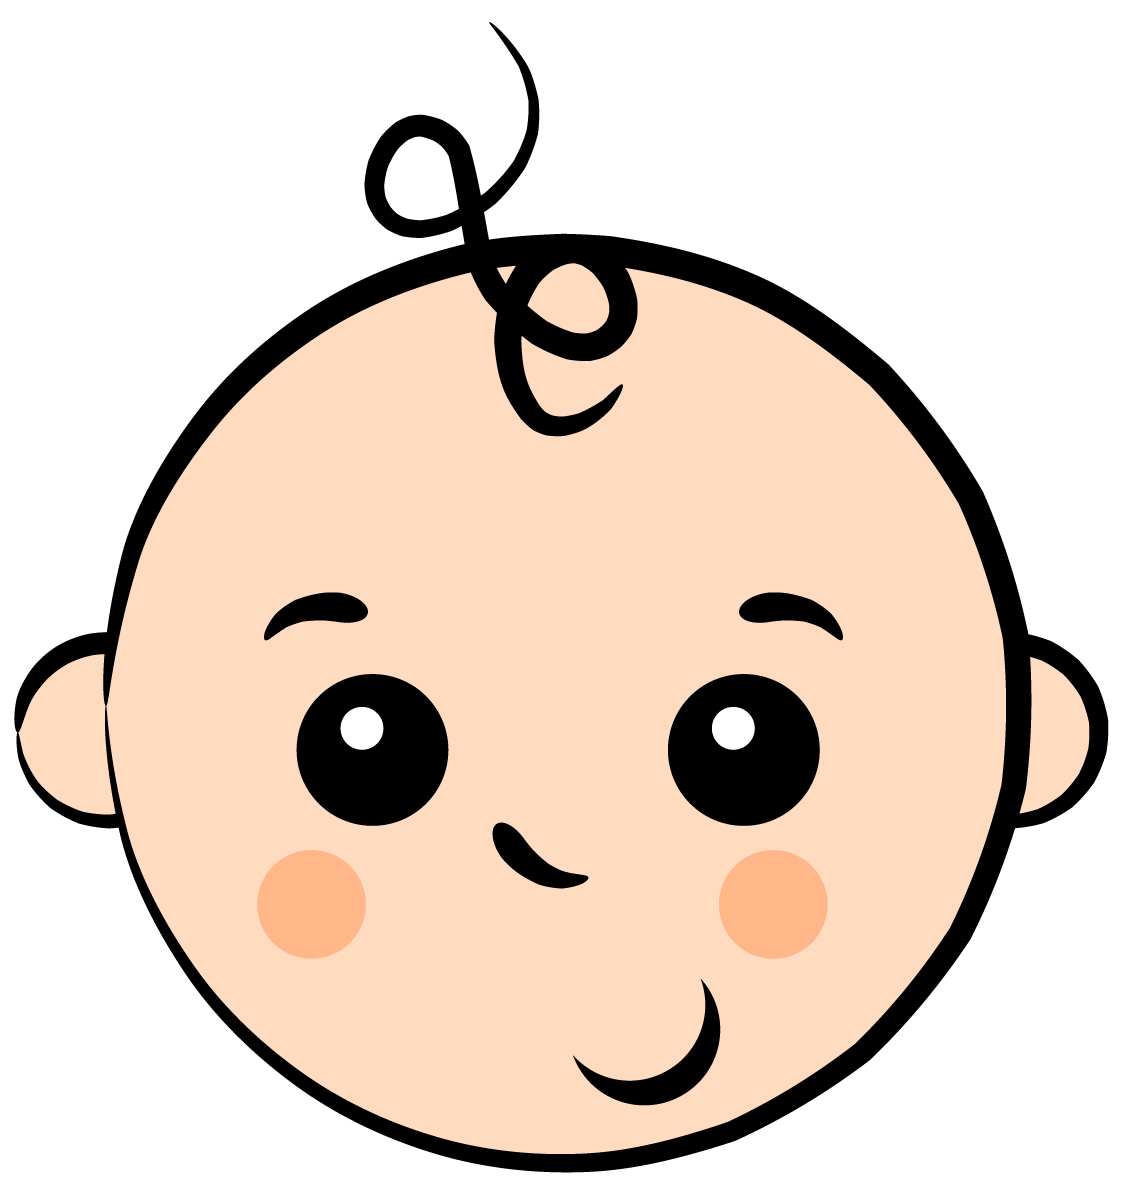 Baby face cartoon clip art